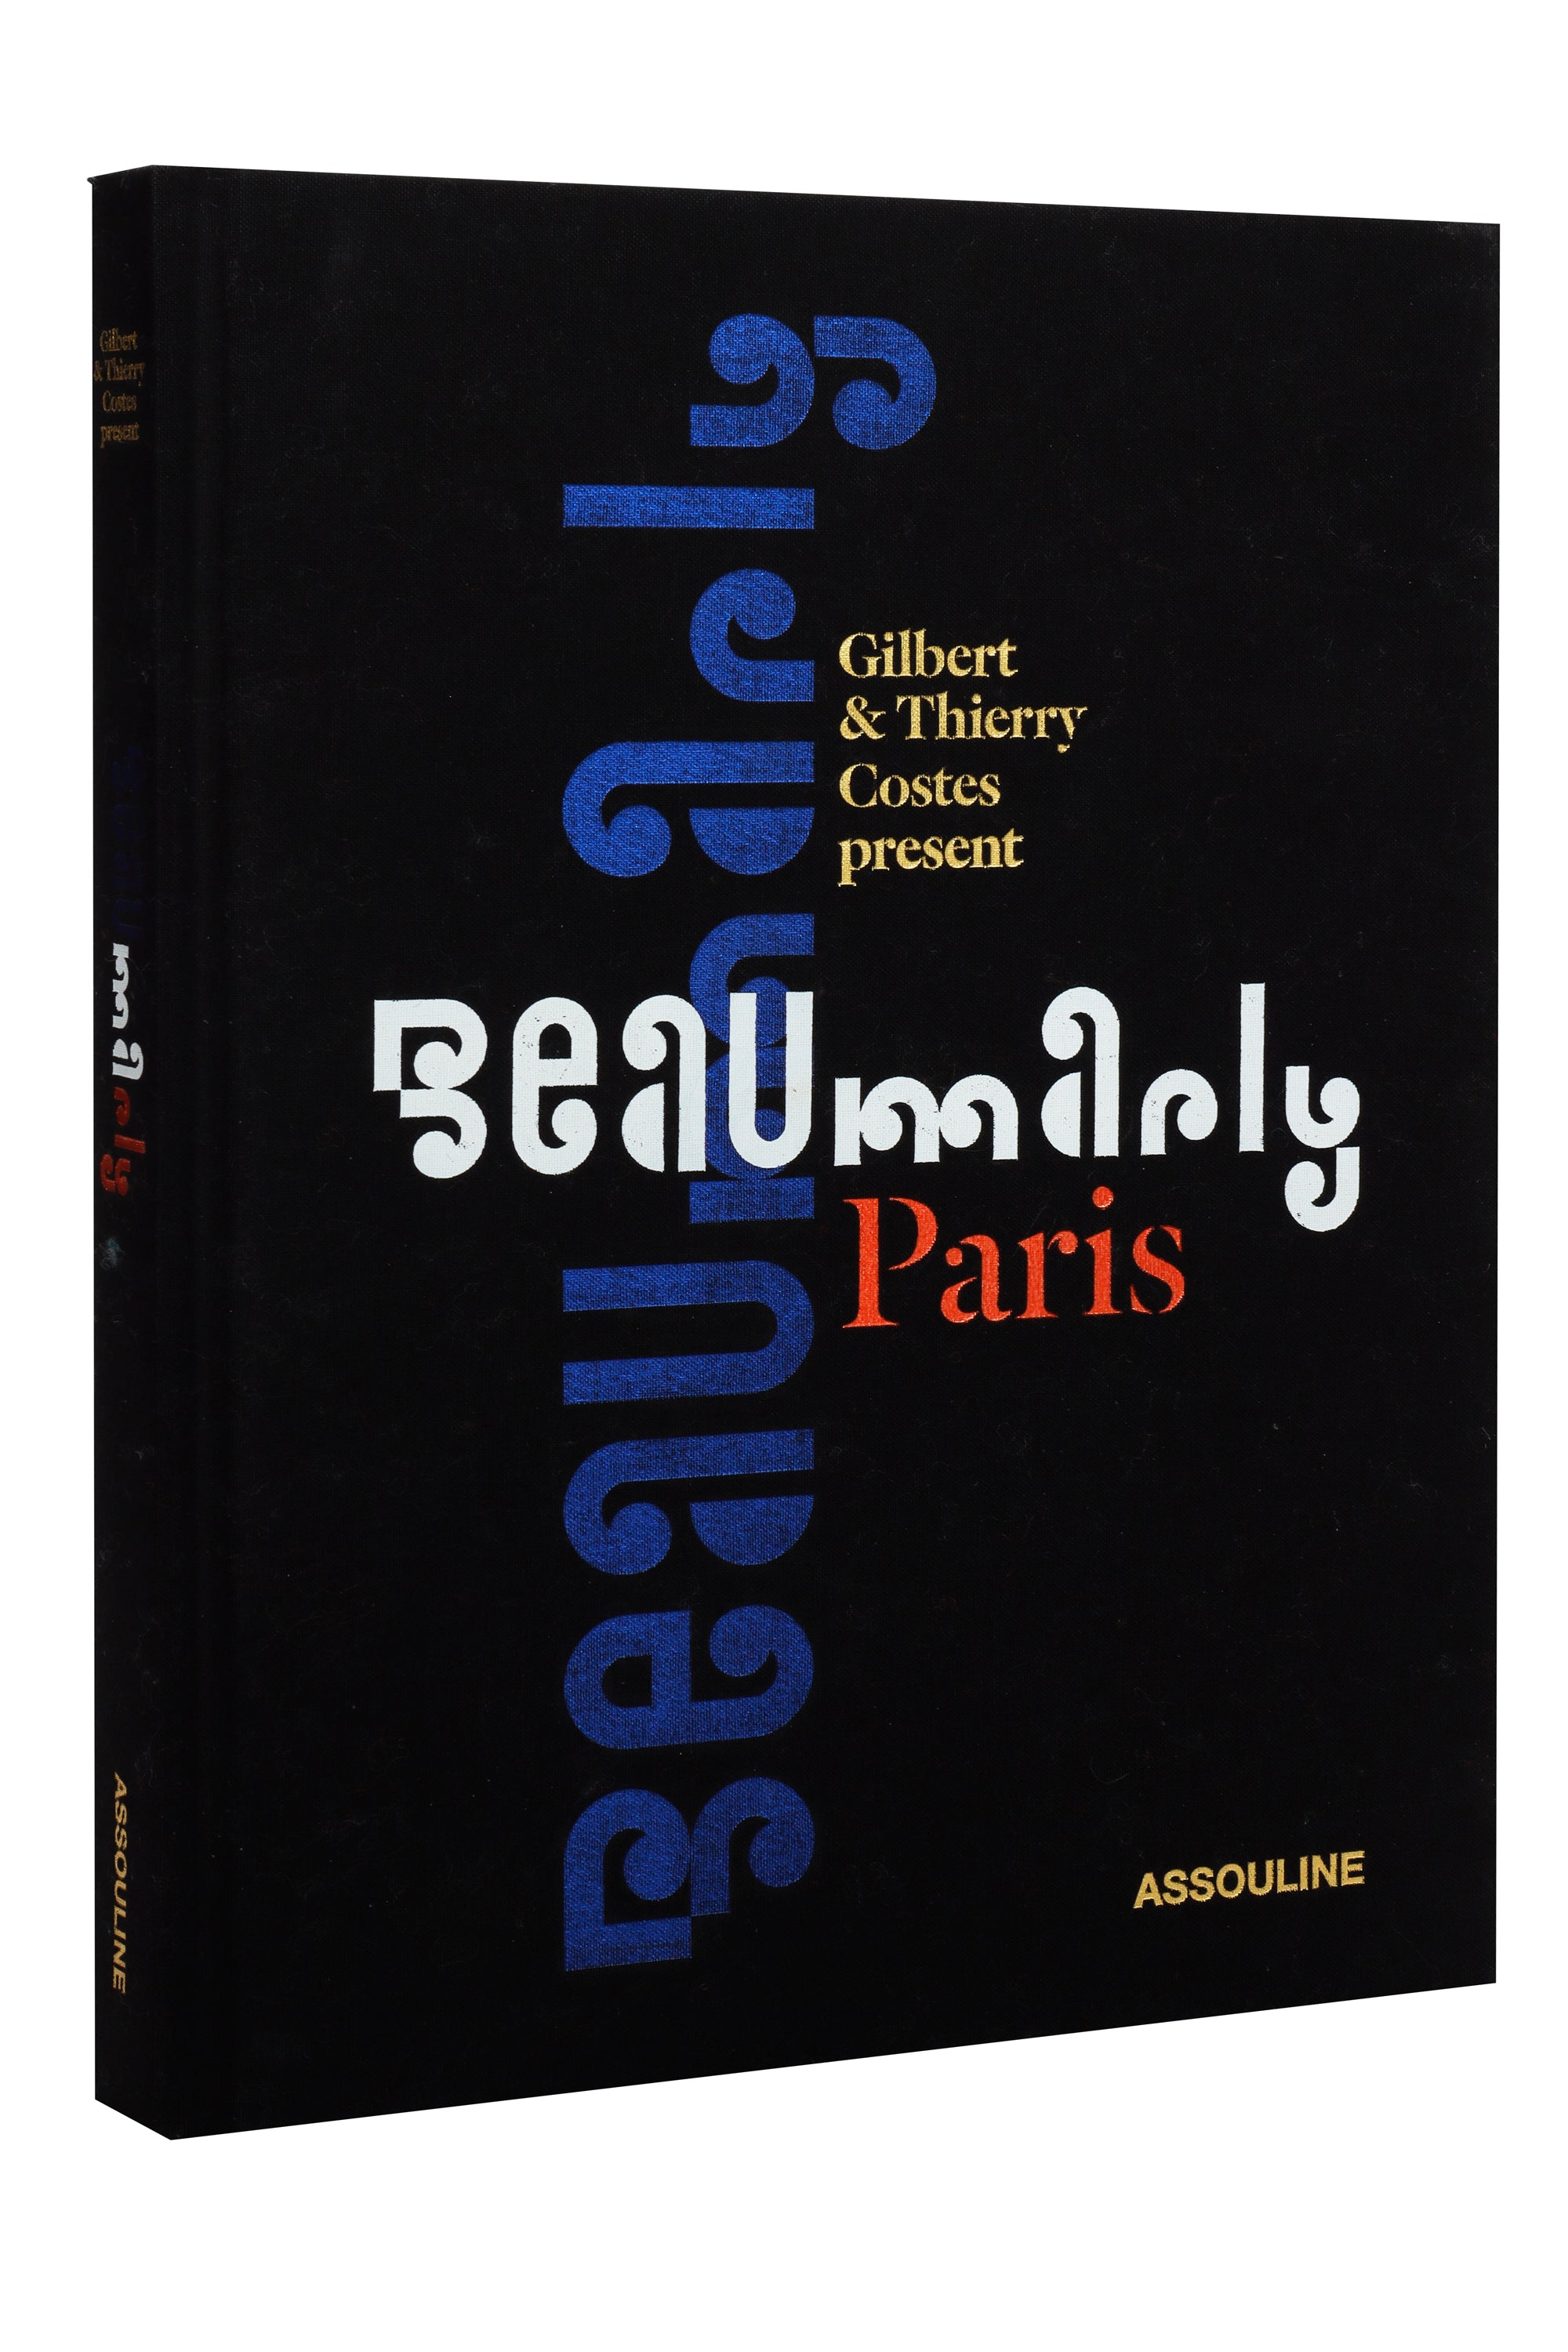 Beaumarly Paris  - Gilbert & Thierry Costes